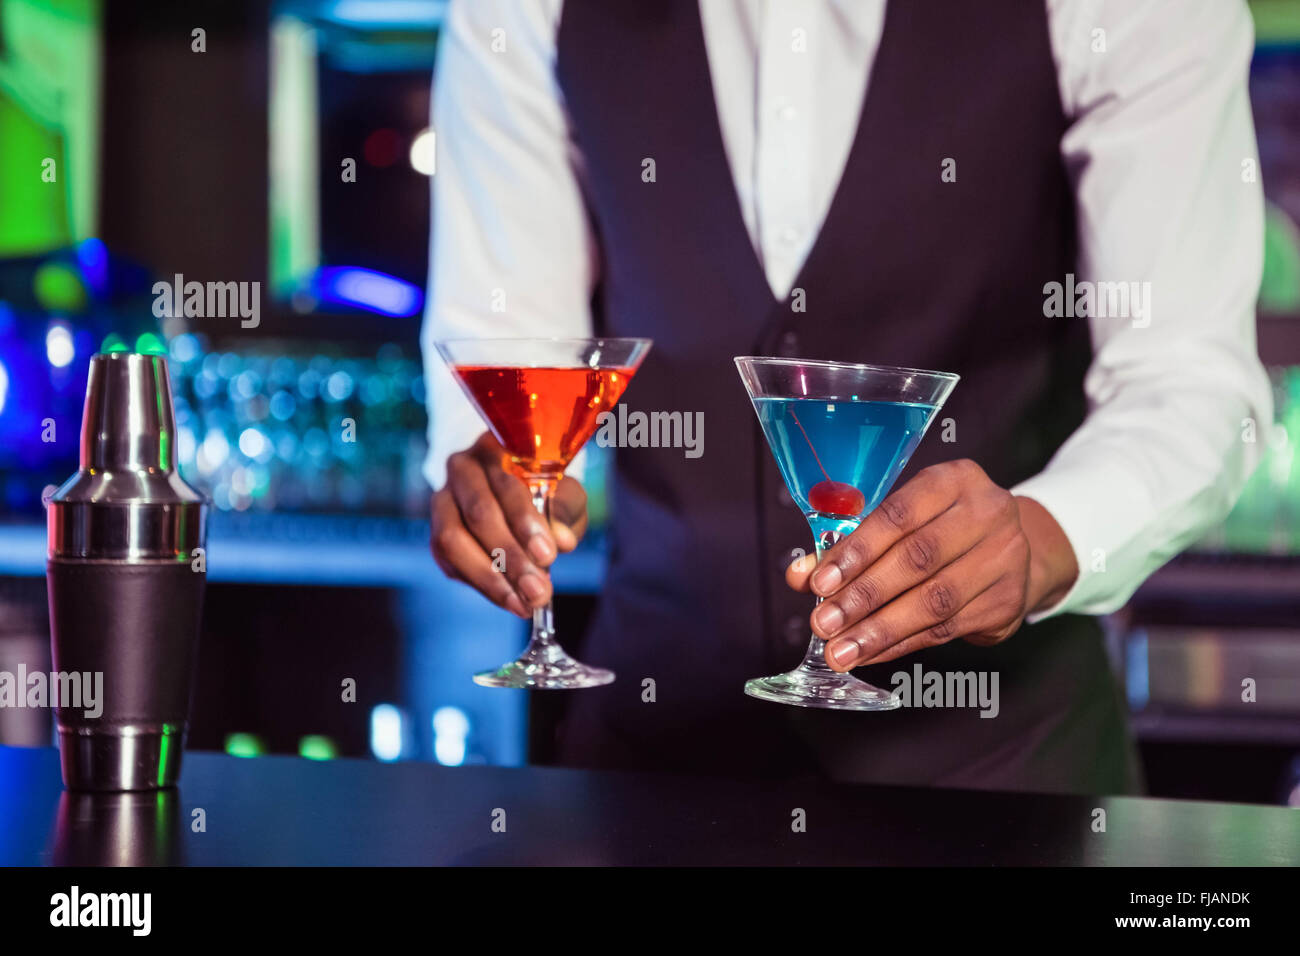 Bartender serving blue and orange cocktail drinks Stock Photo